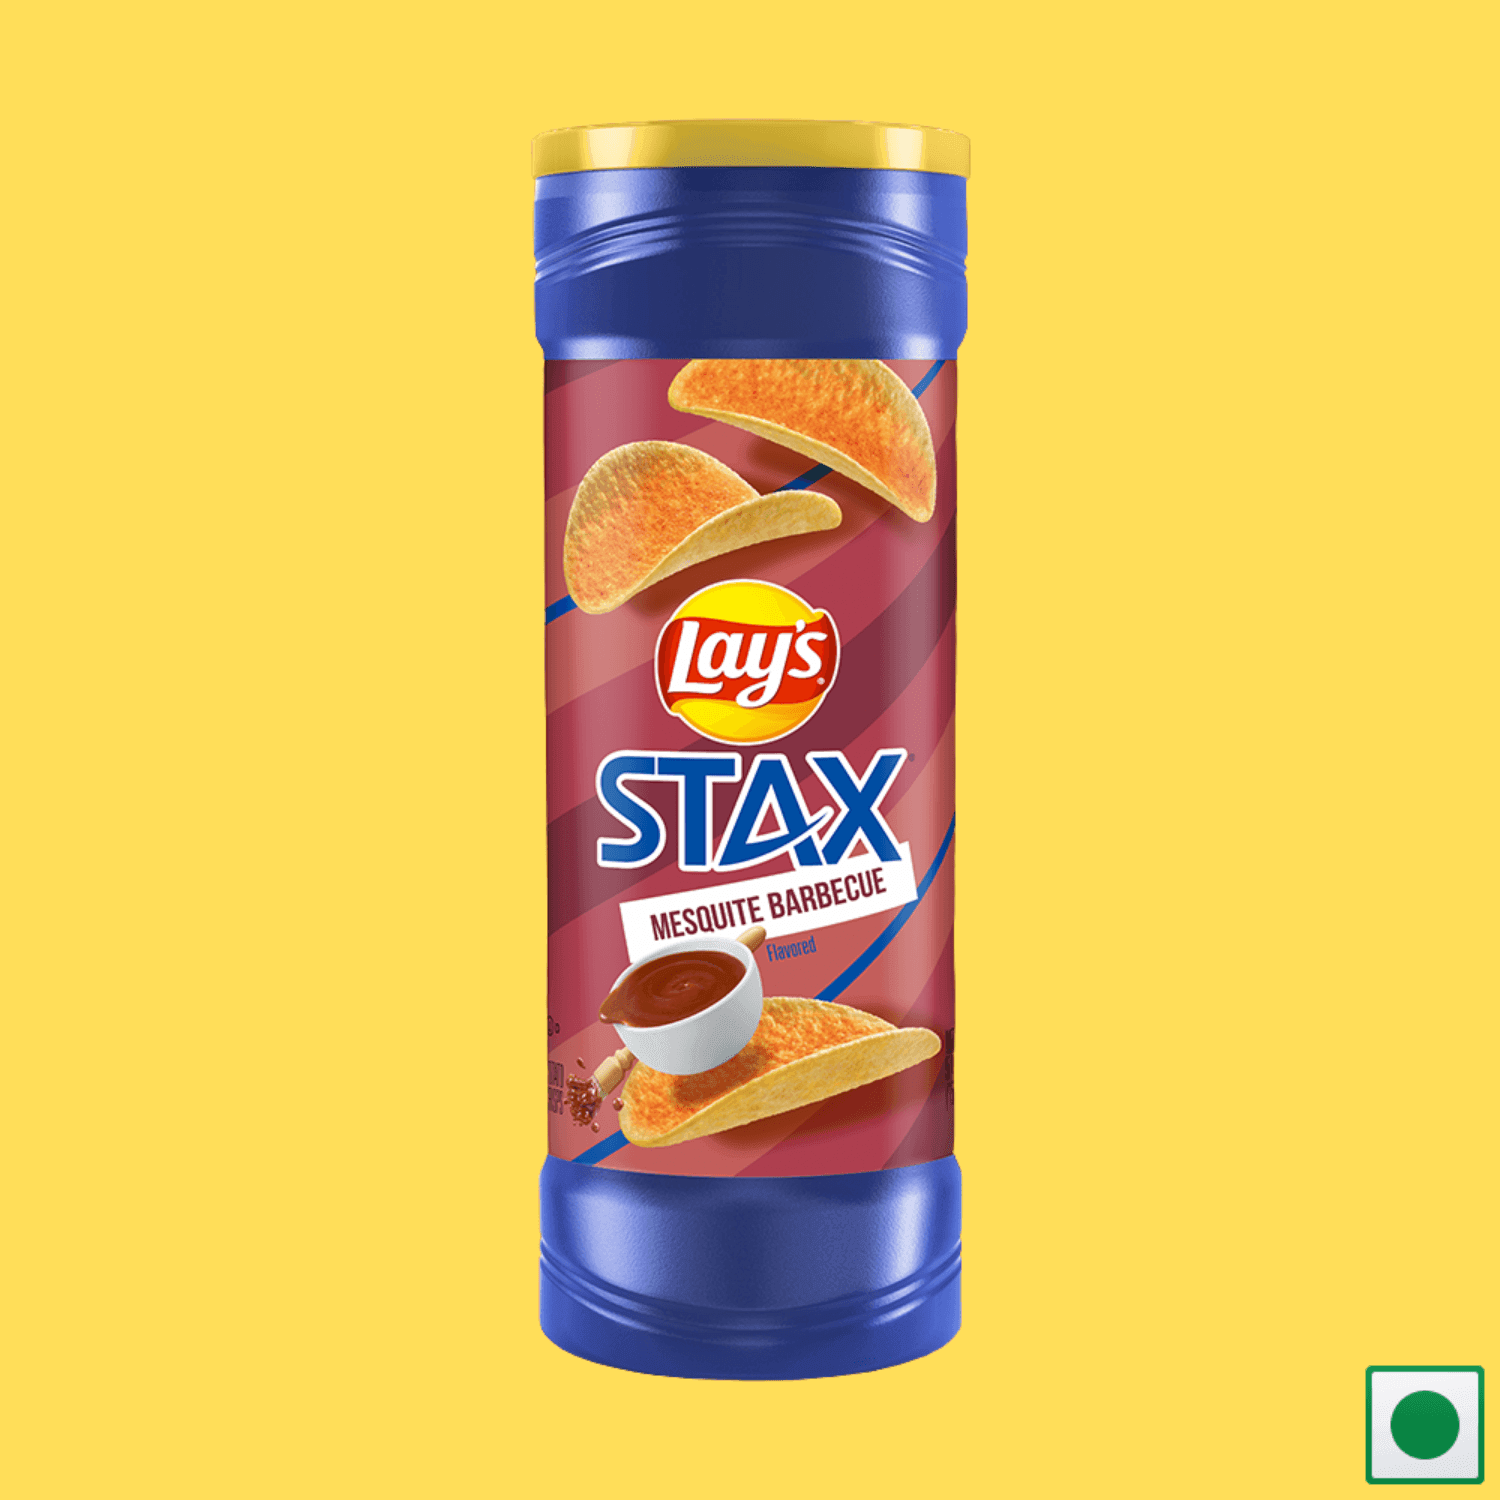 Lay's Stax Mesquite BBQ Flavored Potato Crisps, 155.9g (Imported) - Super 7 Mart